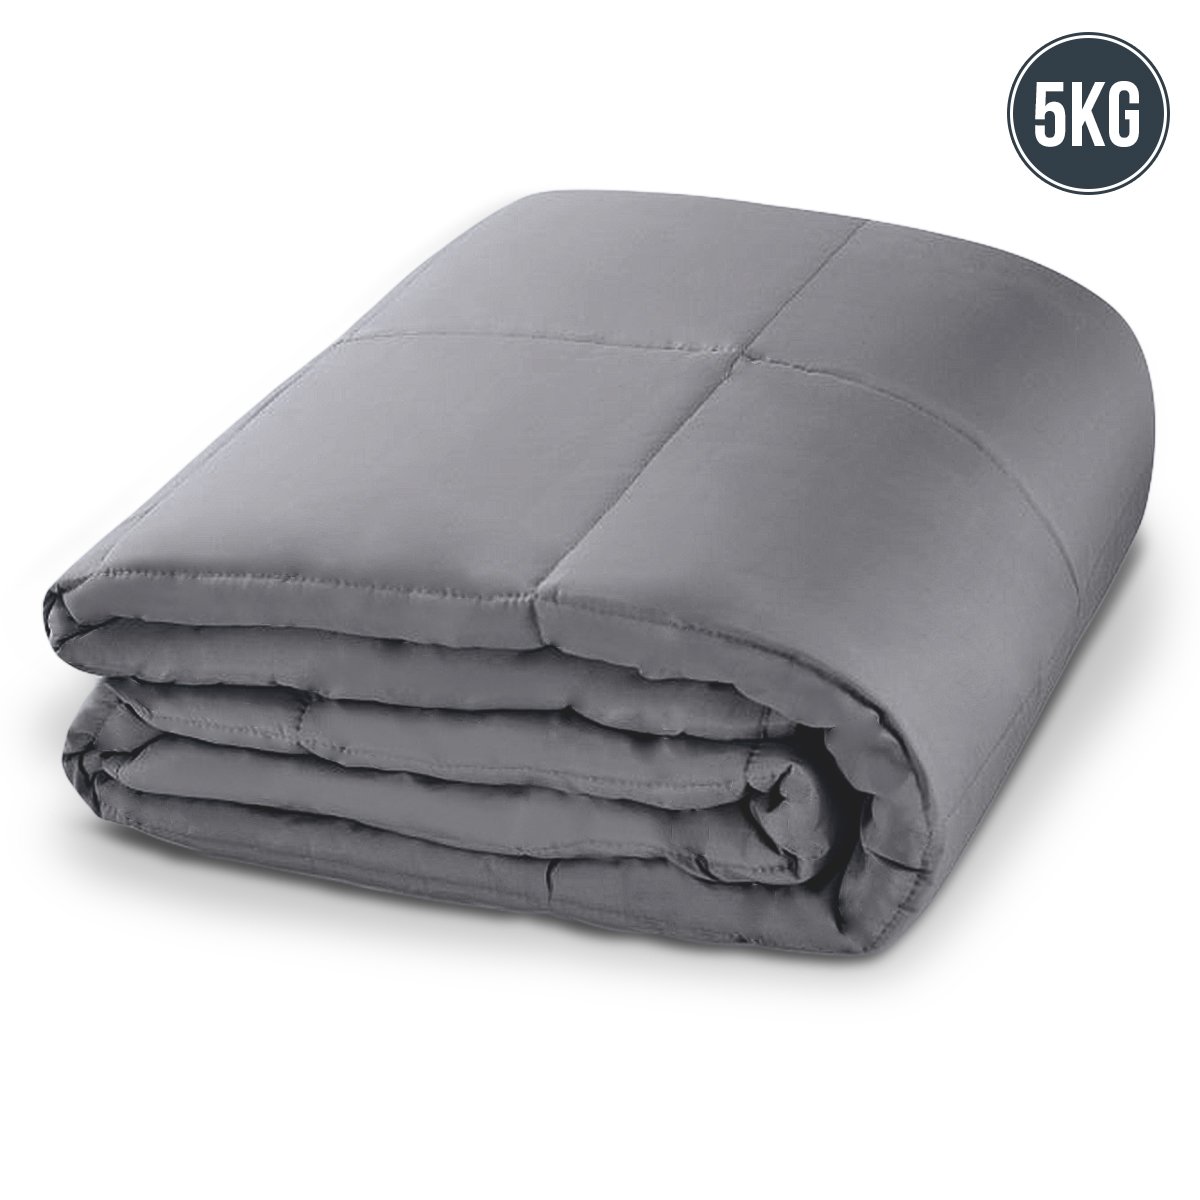 Laura Hill Weighted Blanket Heavy Quilt Doona 5Kg - Grey 1